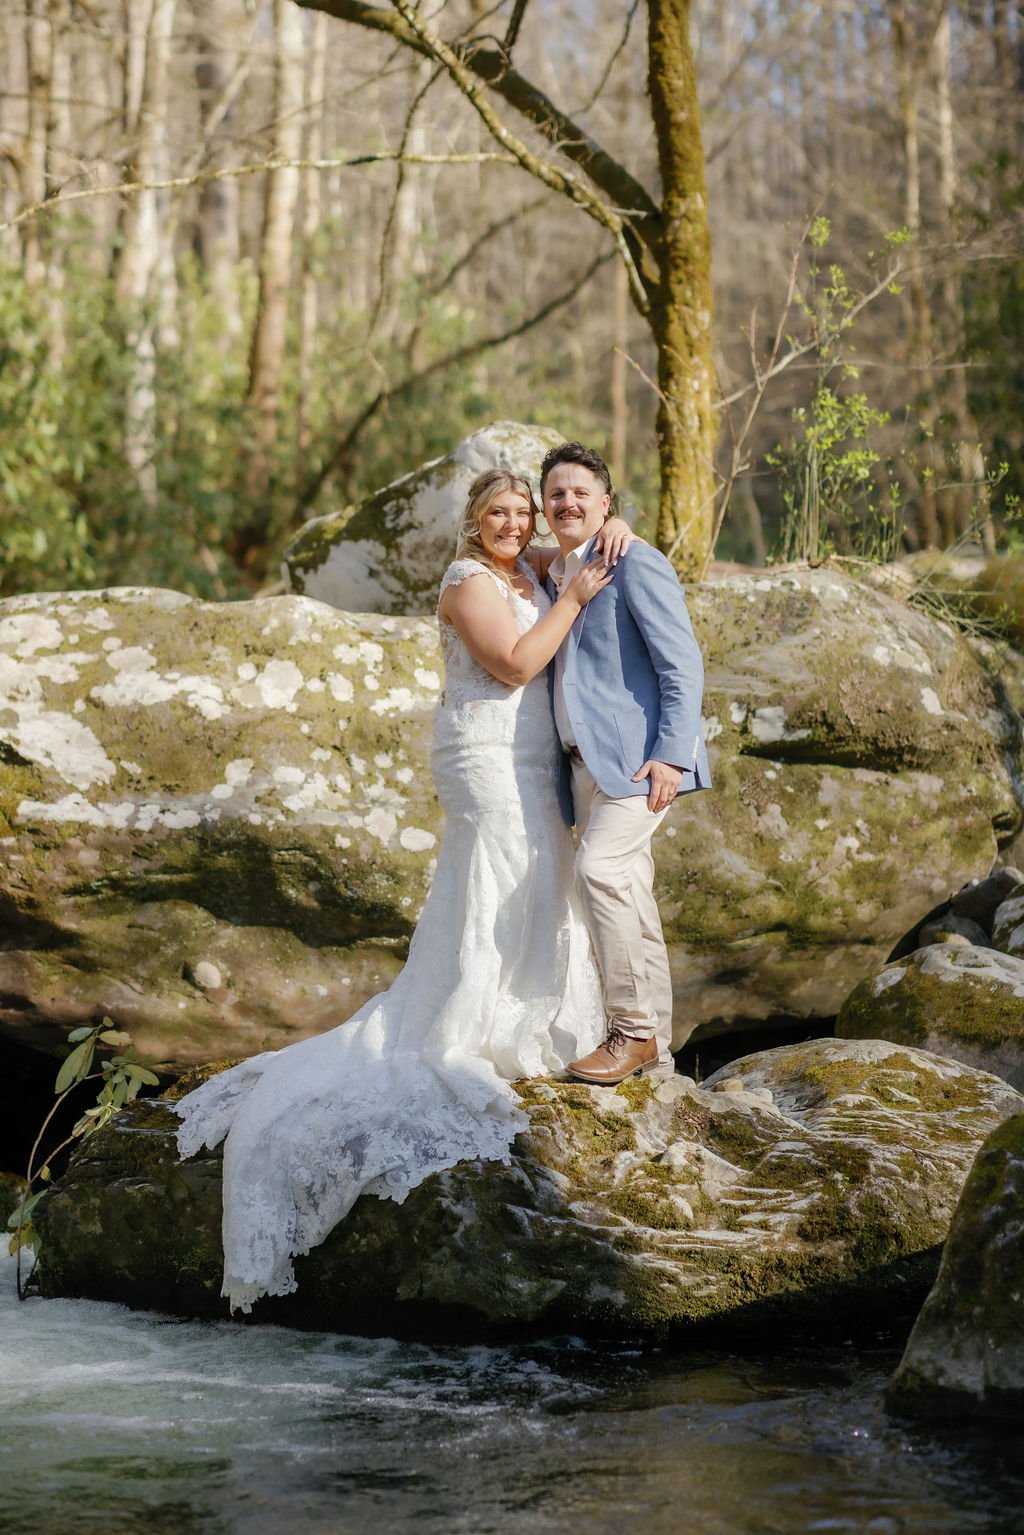 gatlinburg-photographer-tips-for-a-romantic-gatlinburg-elopement-ceremony-couple-embracing